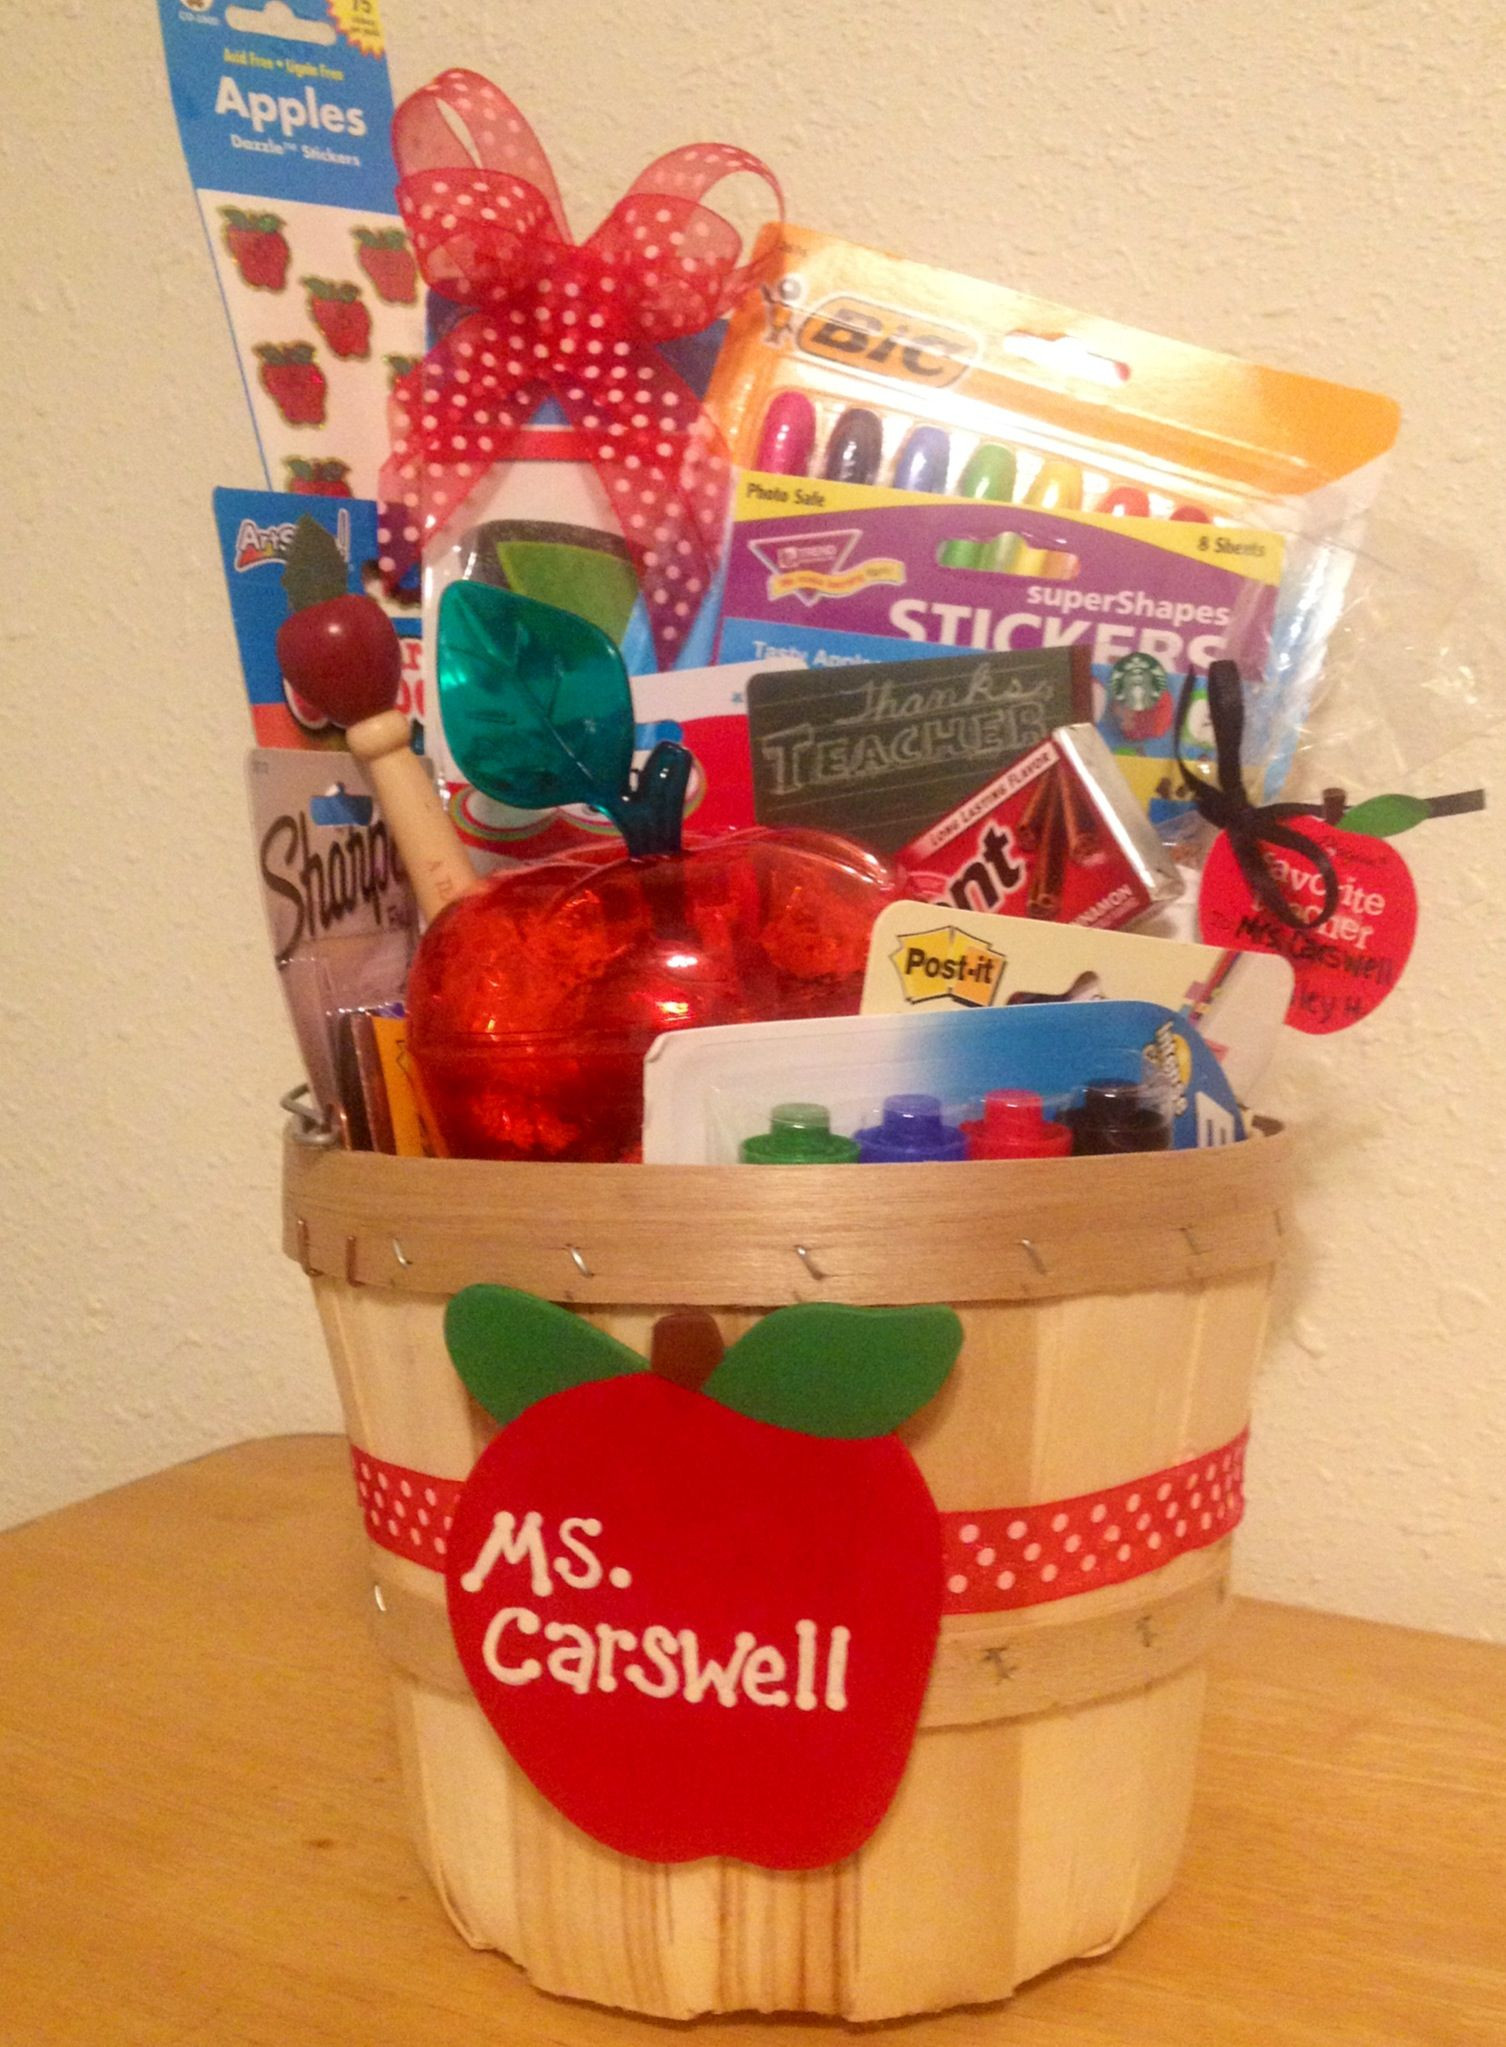 New Teacher Gift Basket Ideas
 The Best Teacher Gift Apple themed t basket We made